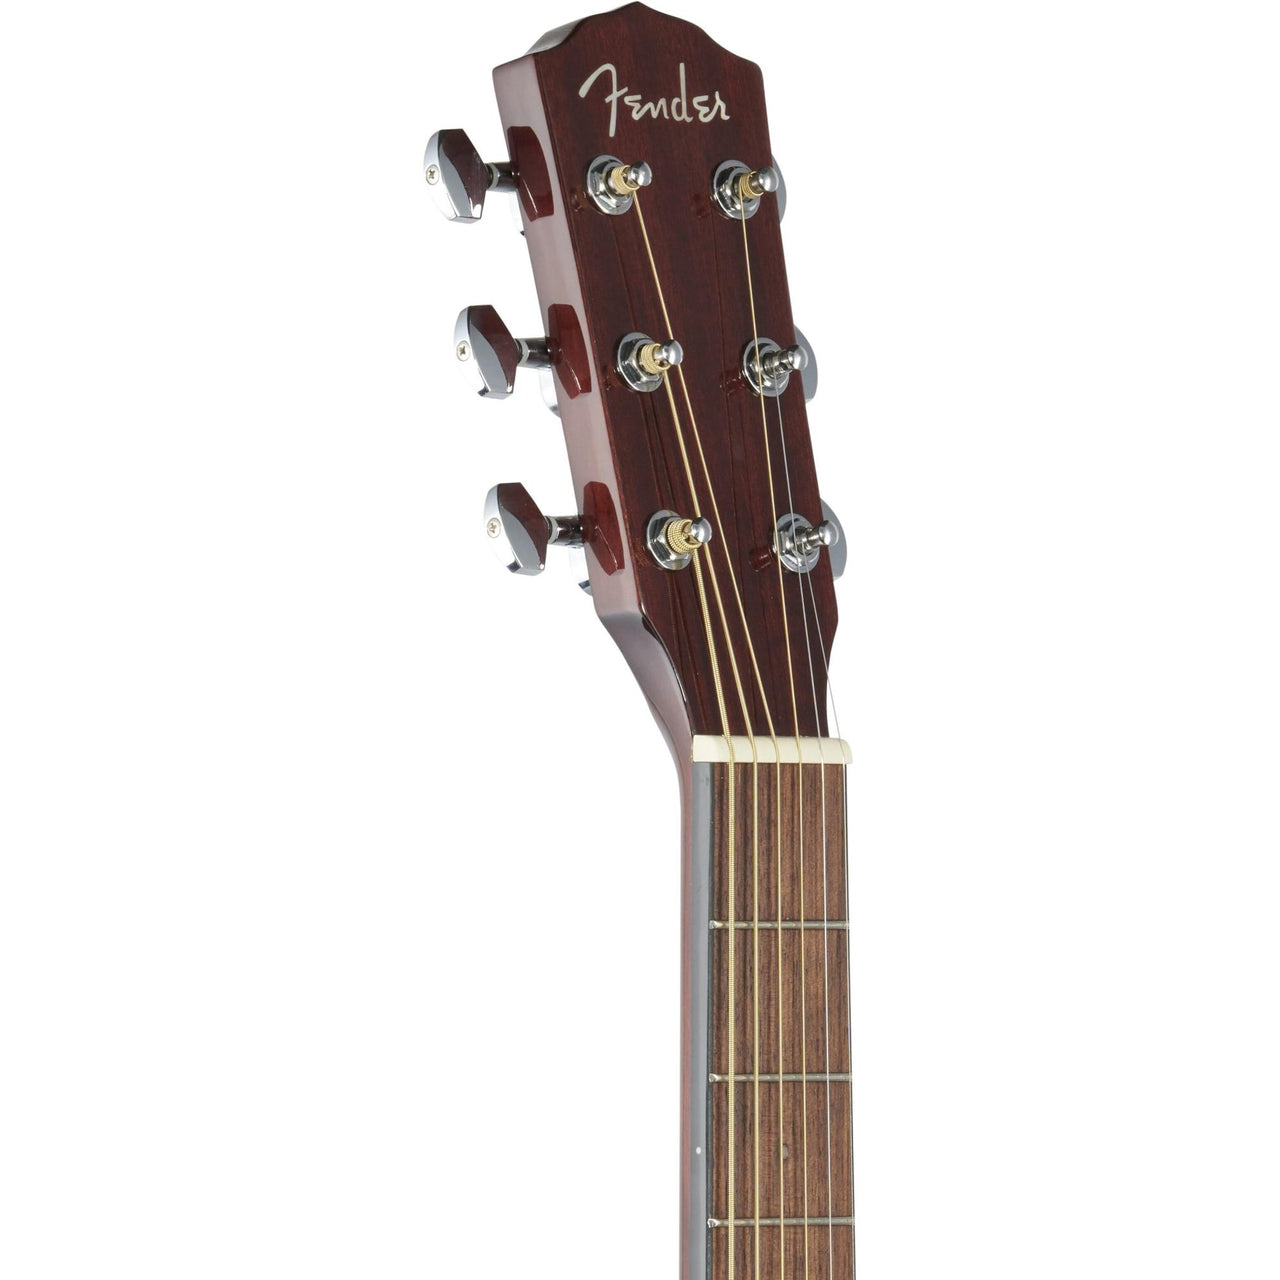 Guitarra Electroacustica Fender Cd-140sce All Mahogany Con Estuche 0962705221